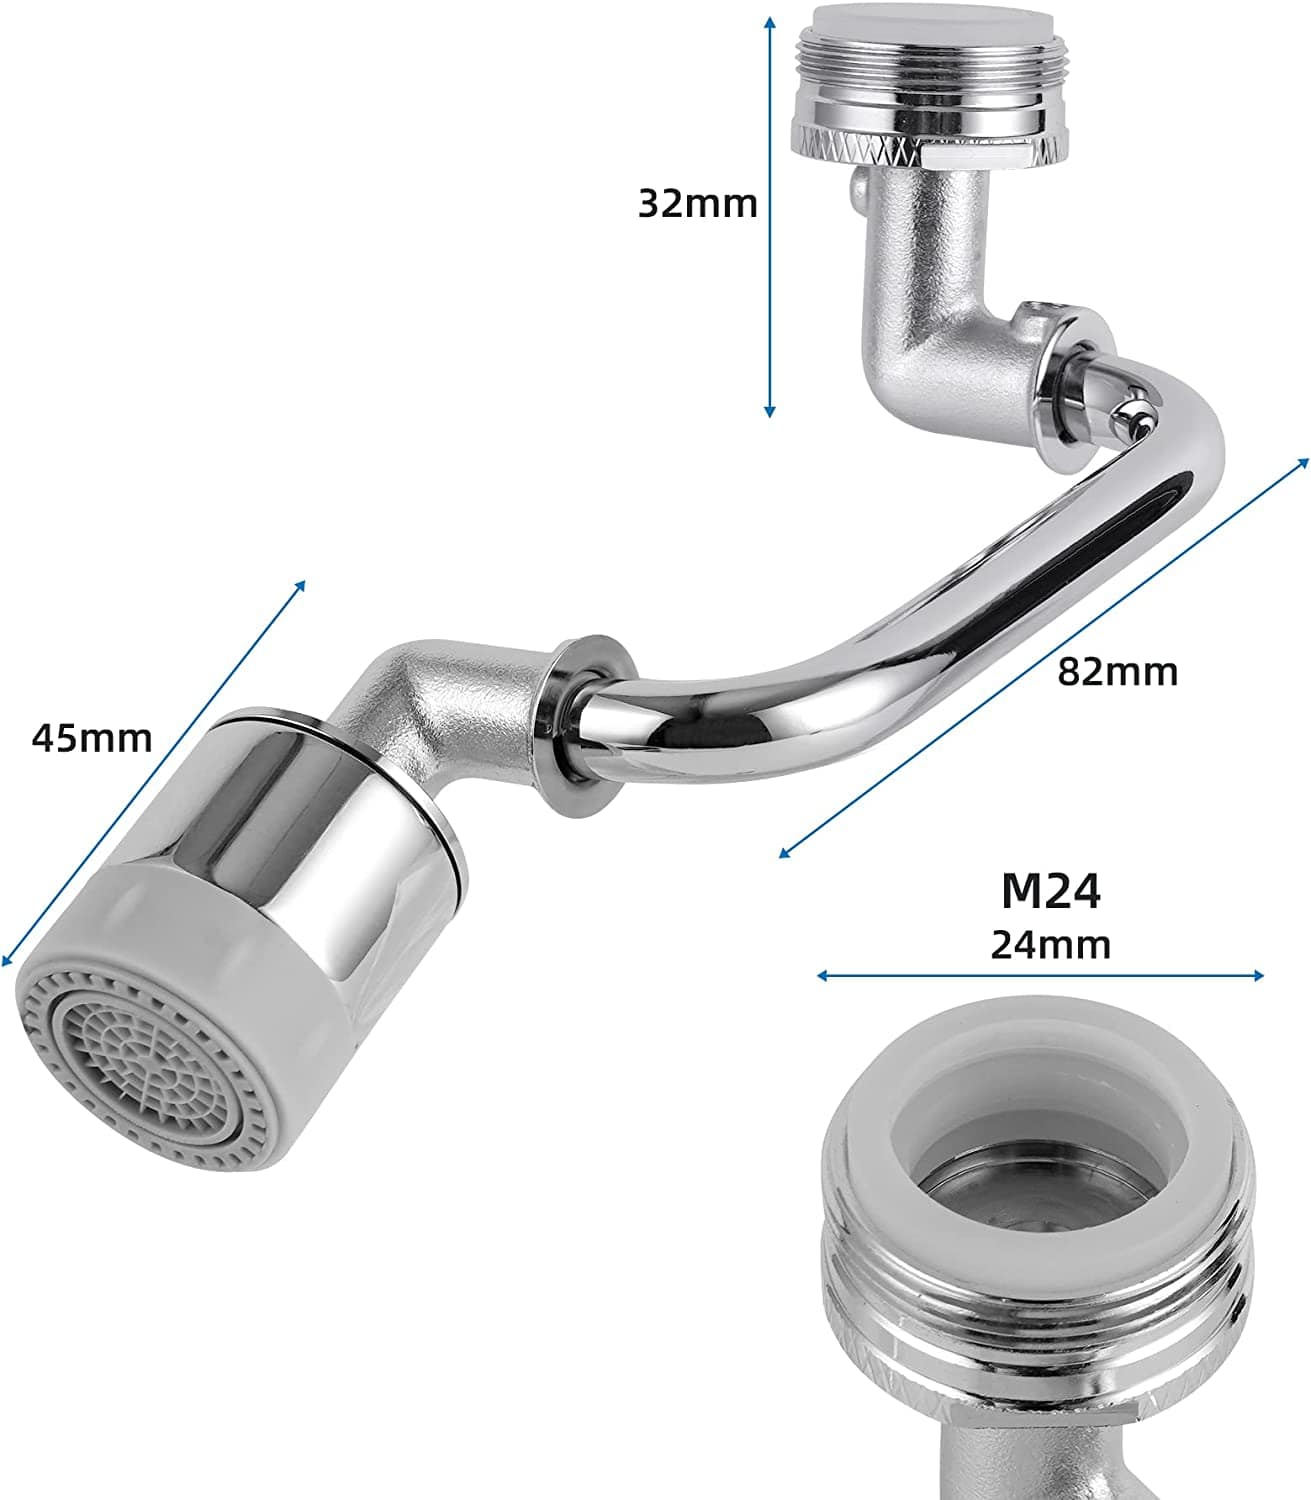 Hibbent Faucet Aerator Pre-Sale Hibbent 1080 Degree Big Angle Swivel Faucet Aerator Dual Function 2-Flow Kitchen Sink Tap Aerator - Chrome